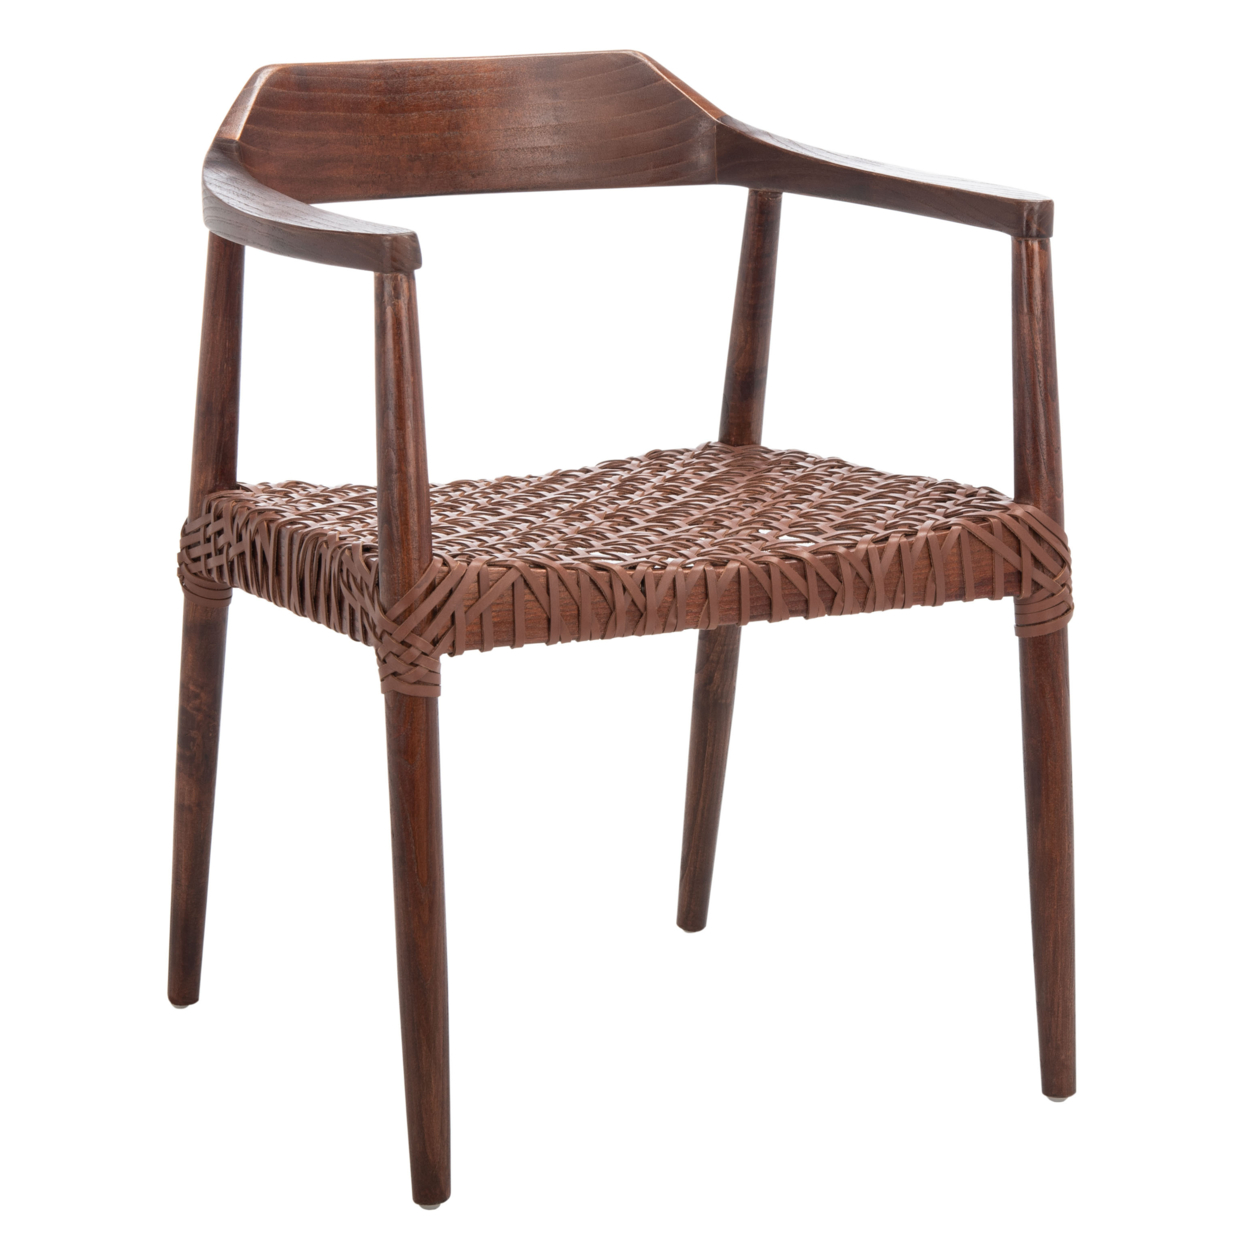 SAFAVIEH Munro Leather Woven Accent Chair Walnut /Cognac